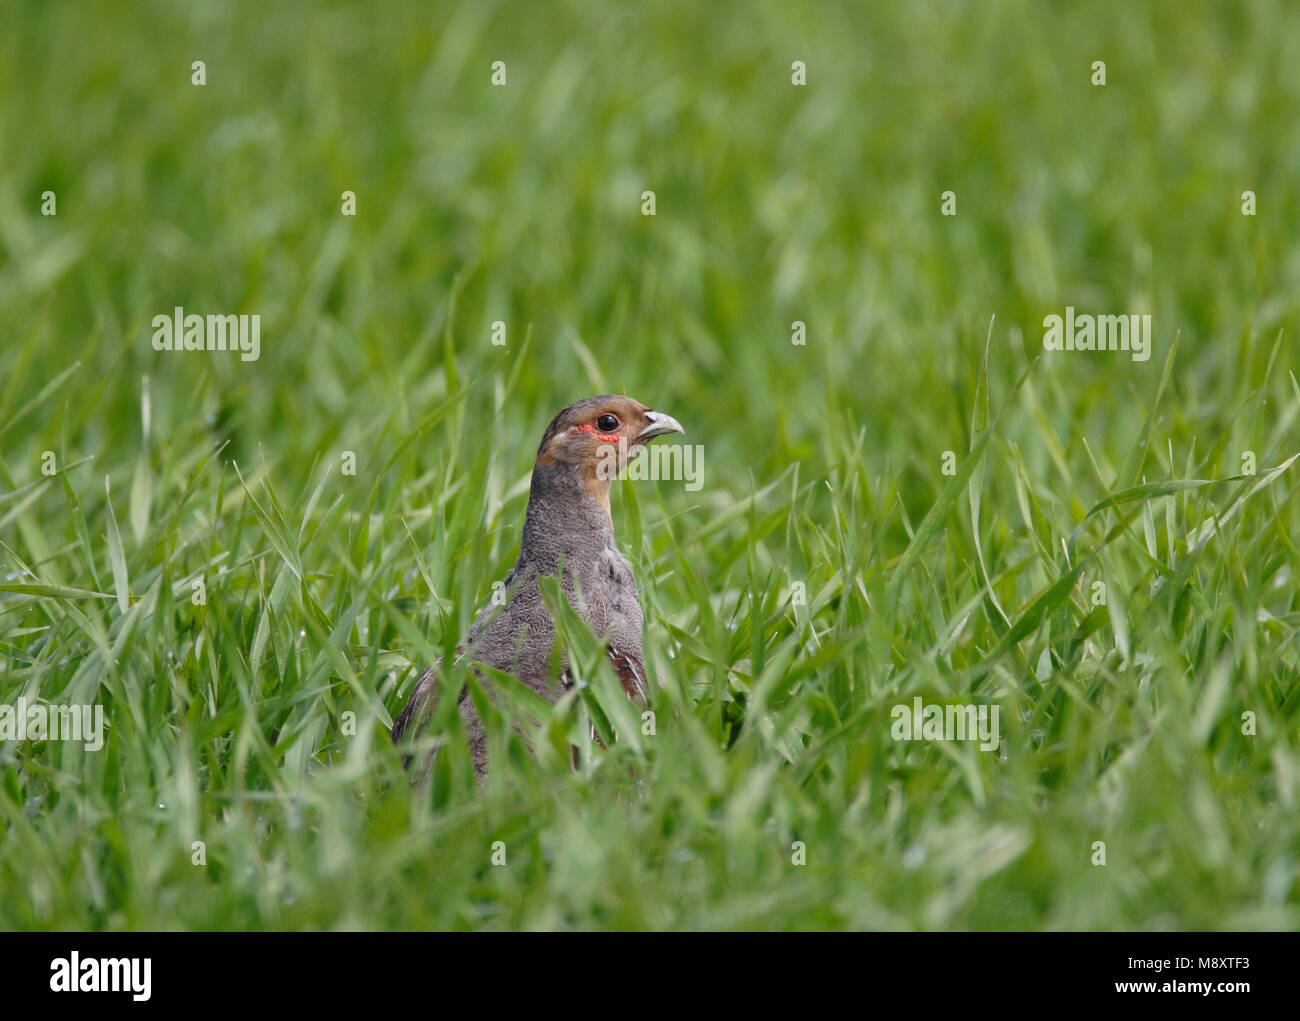 Patrijs in weiland; Grey Partridge in meadow Stock Photo